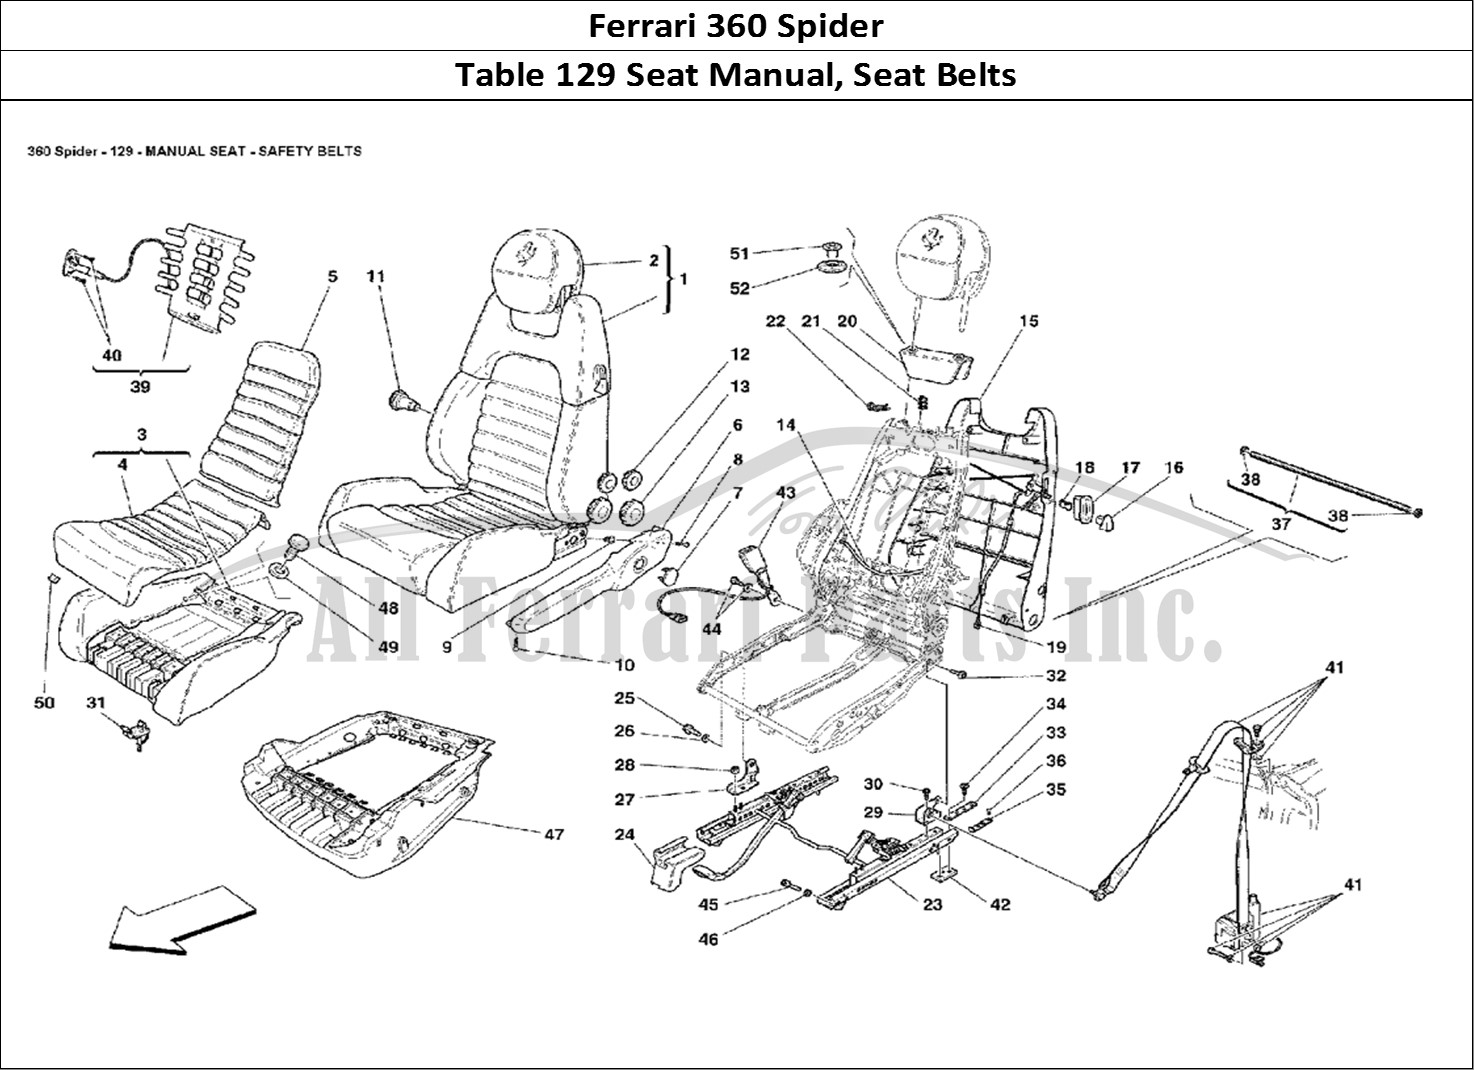 Ferrari Parts Ferrari 360 Spider Page 129 Manual Seat- Safety Belts